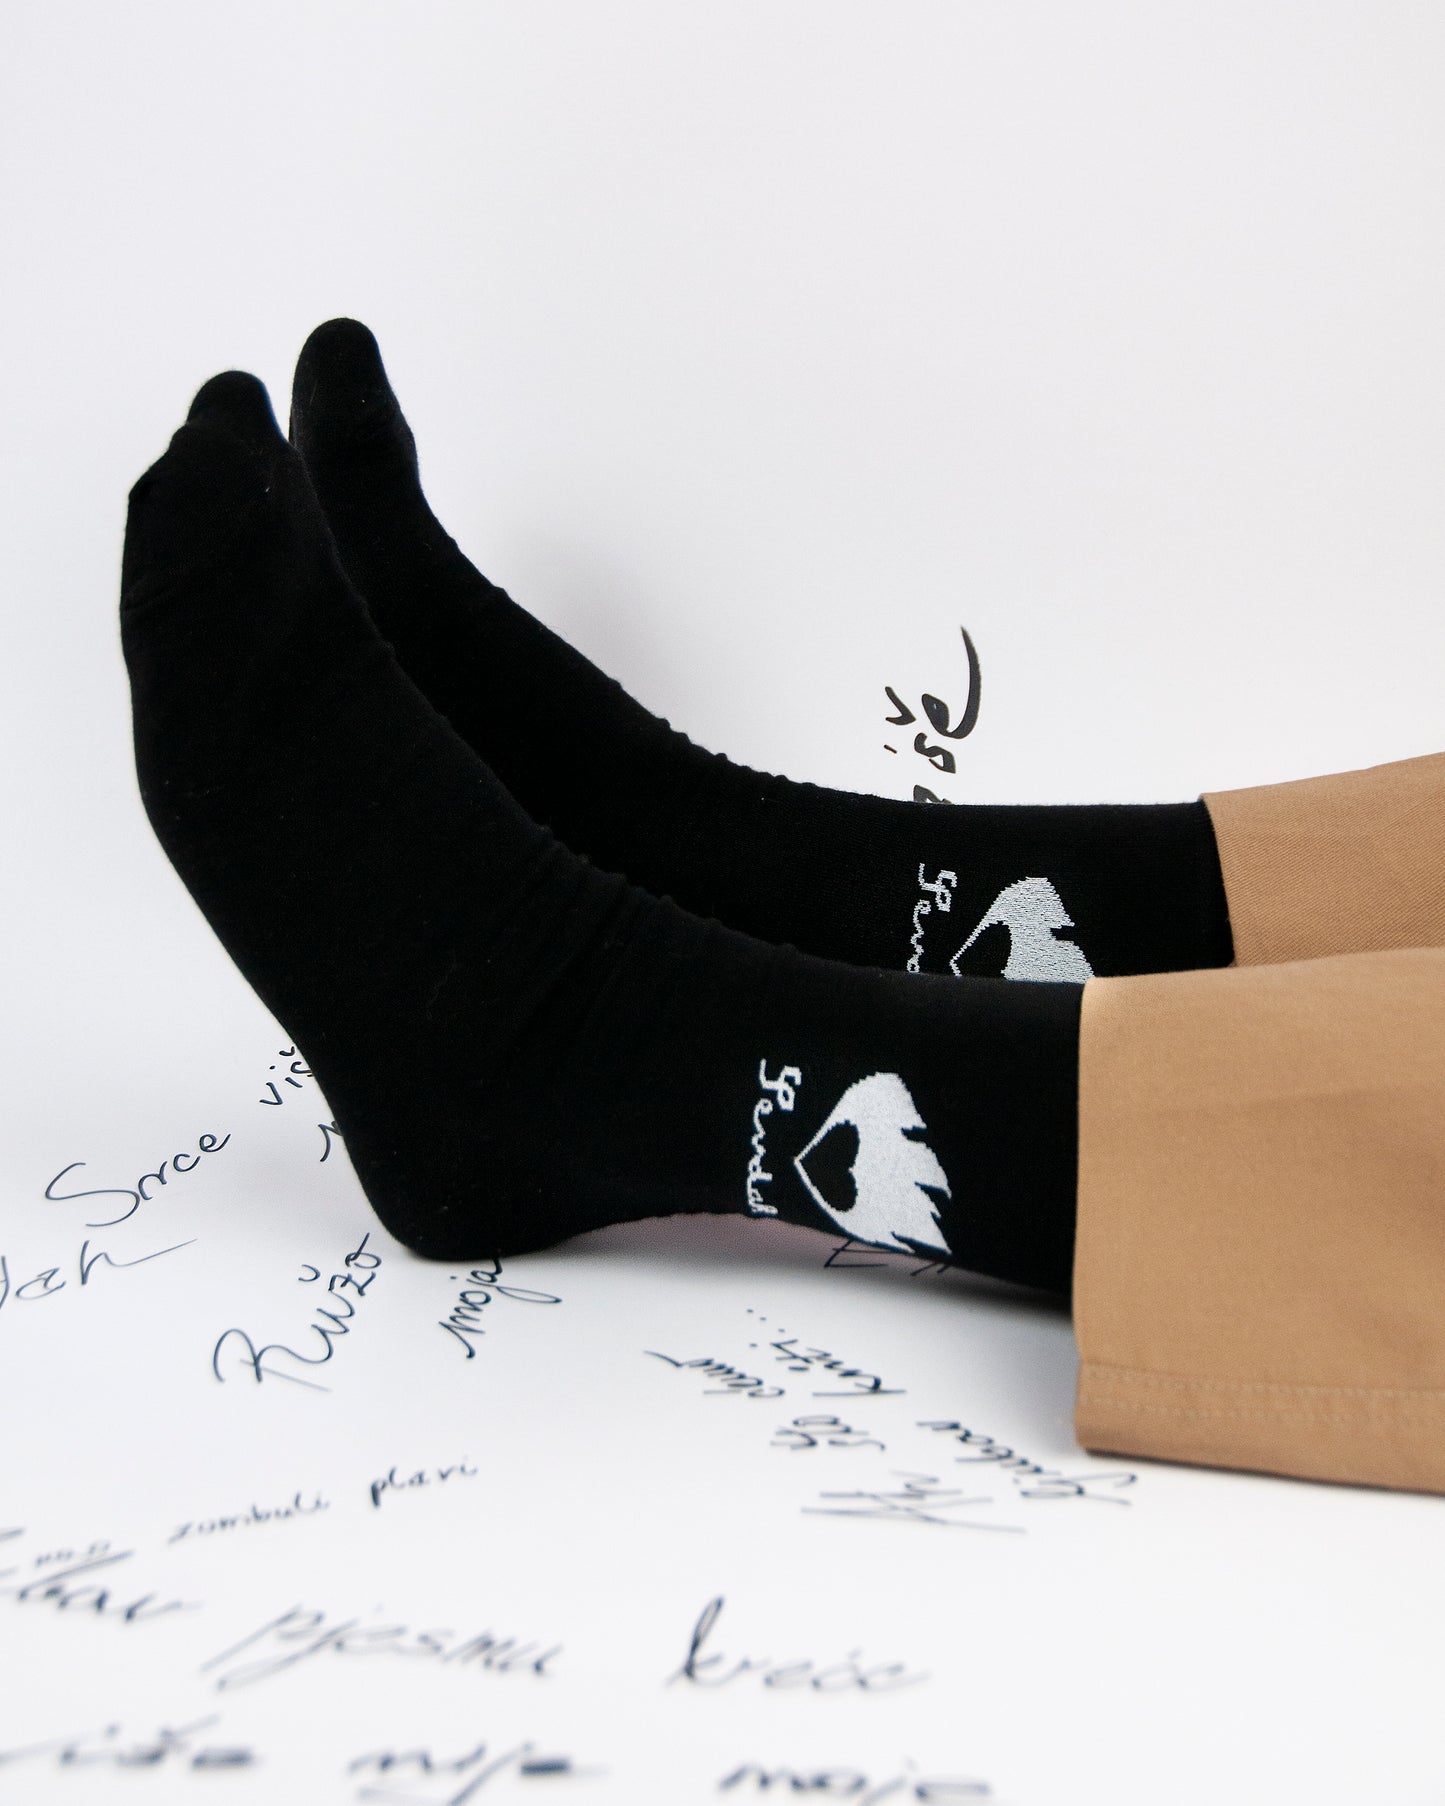 "Sevdah" Socks by Bazerdzan Wear